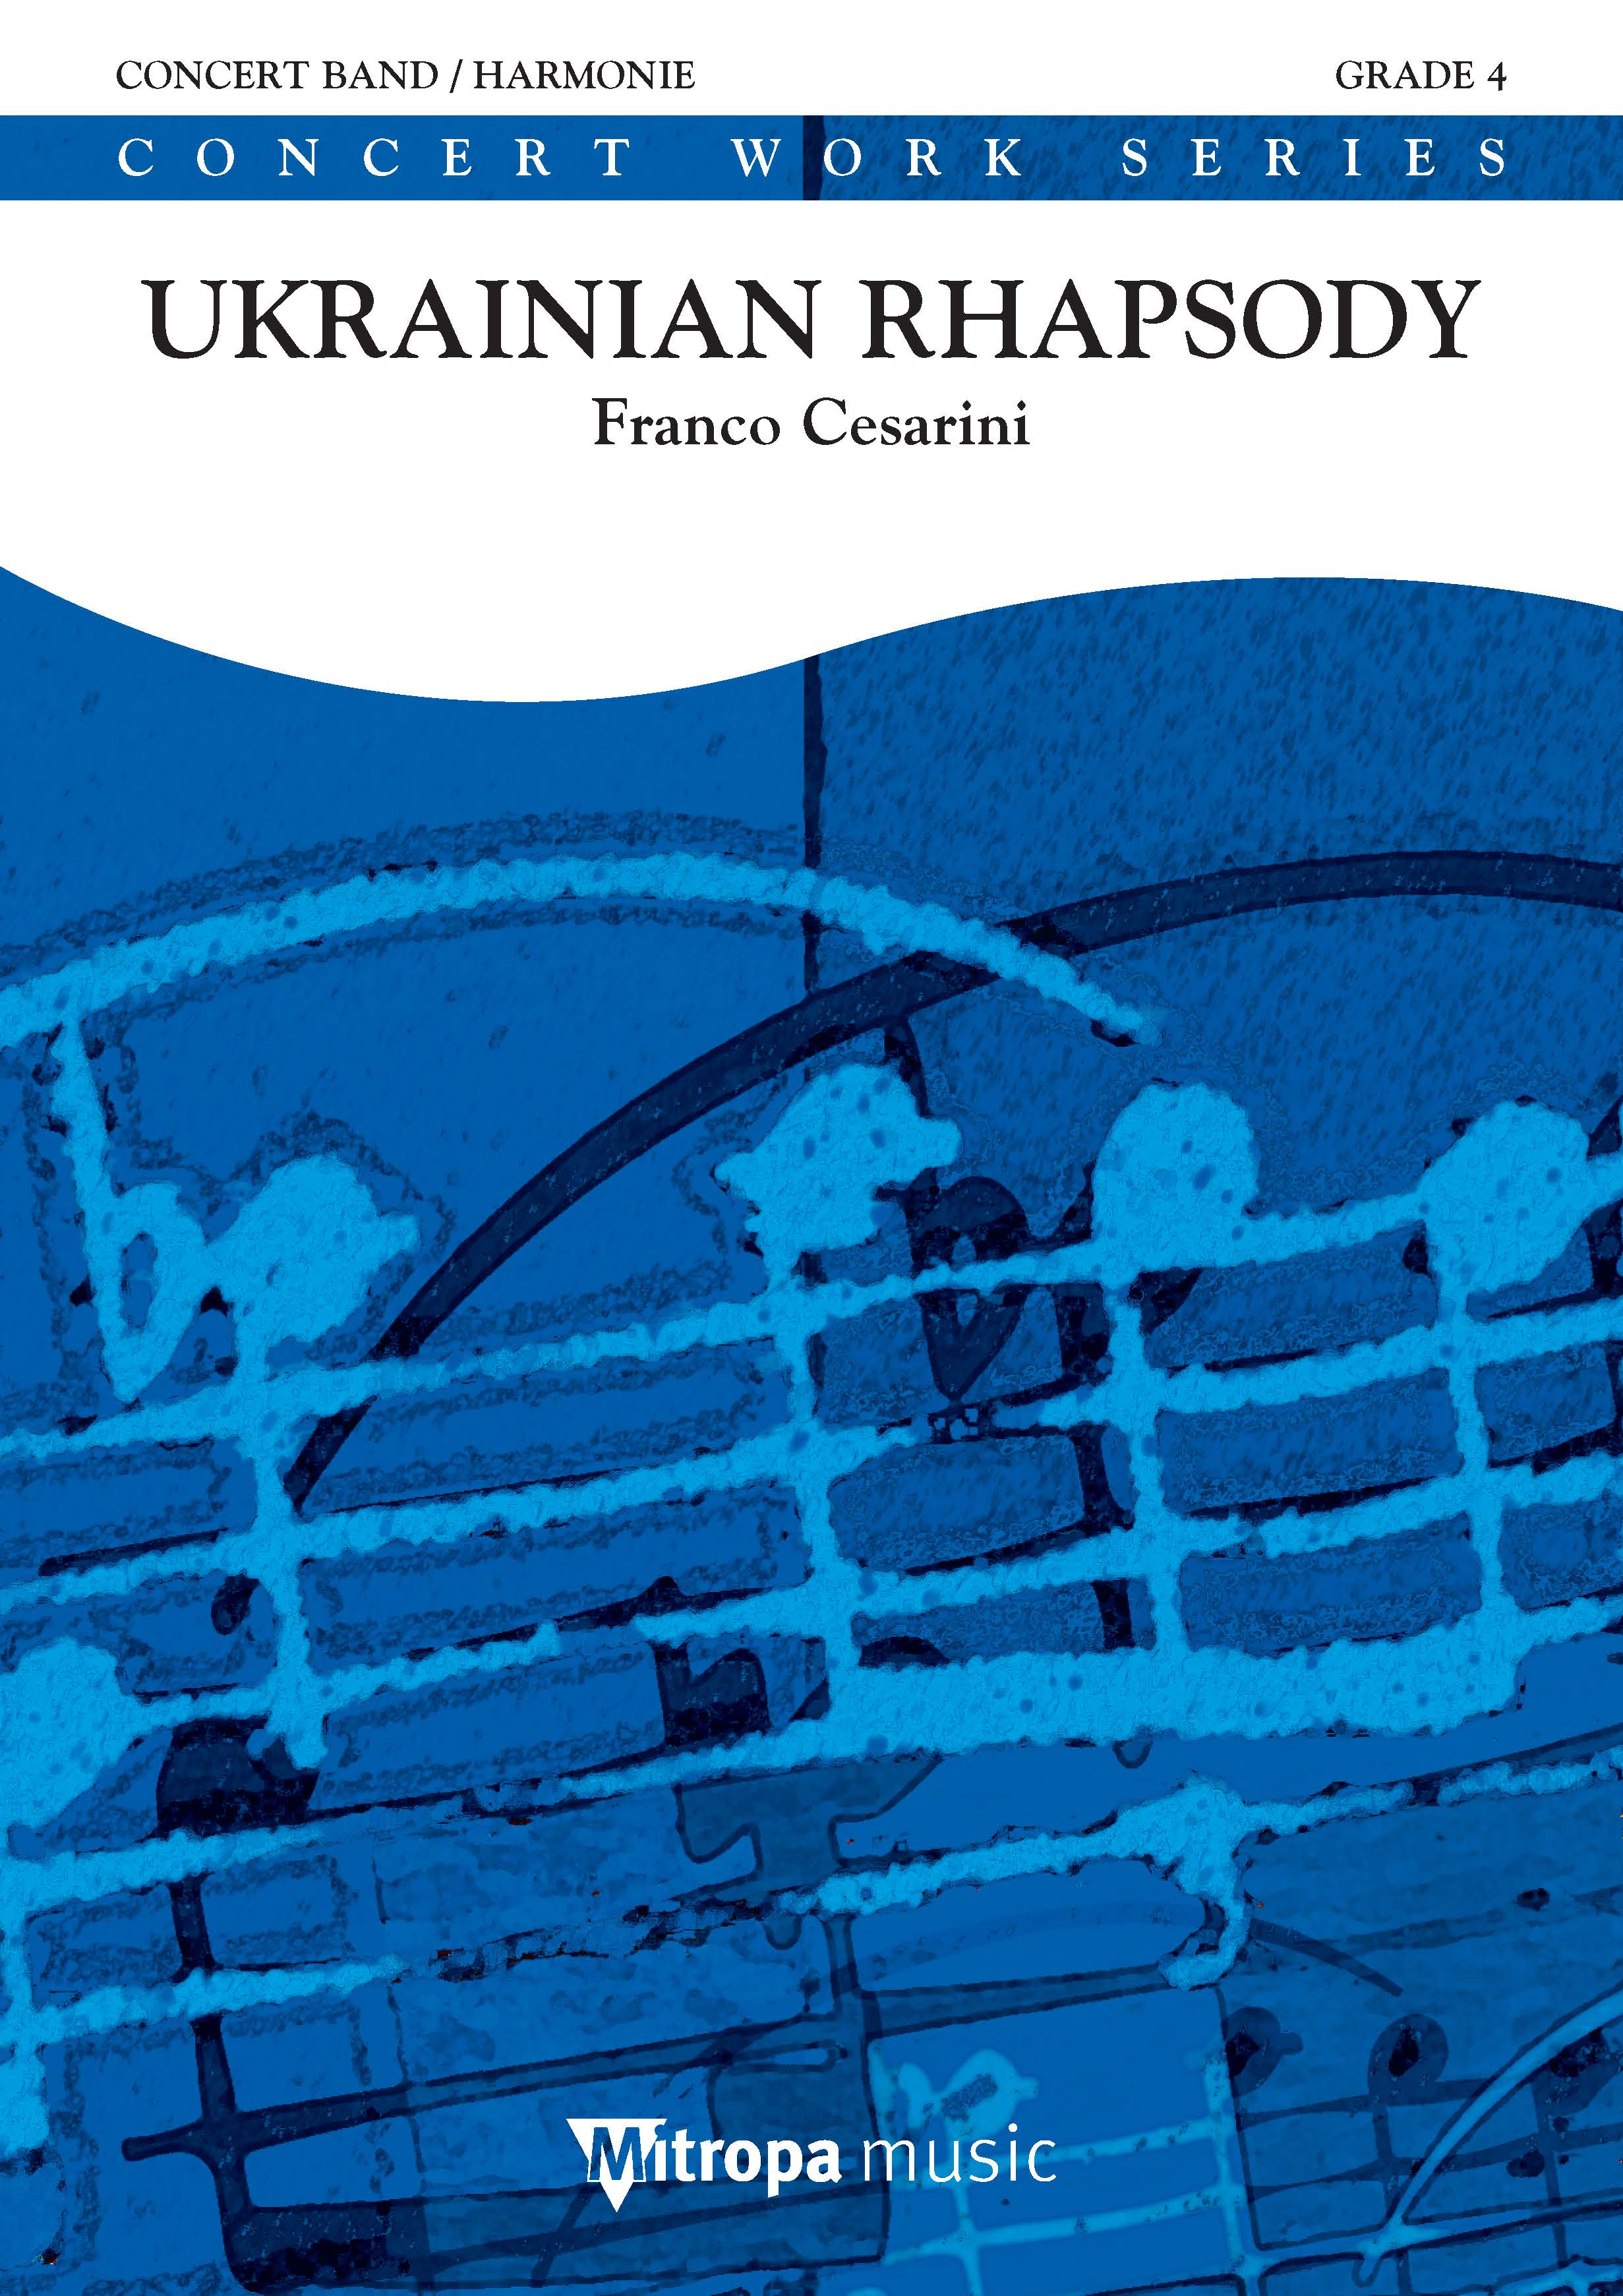 Franco Cesarini: Ukrainian Rhapsody: Concert Band: Score